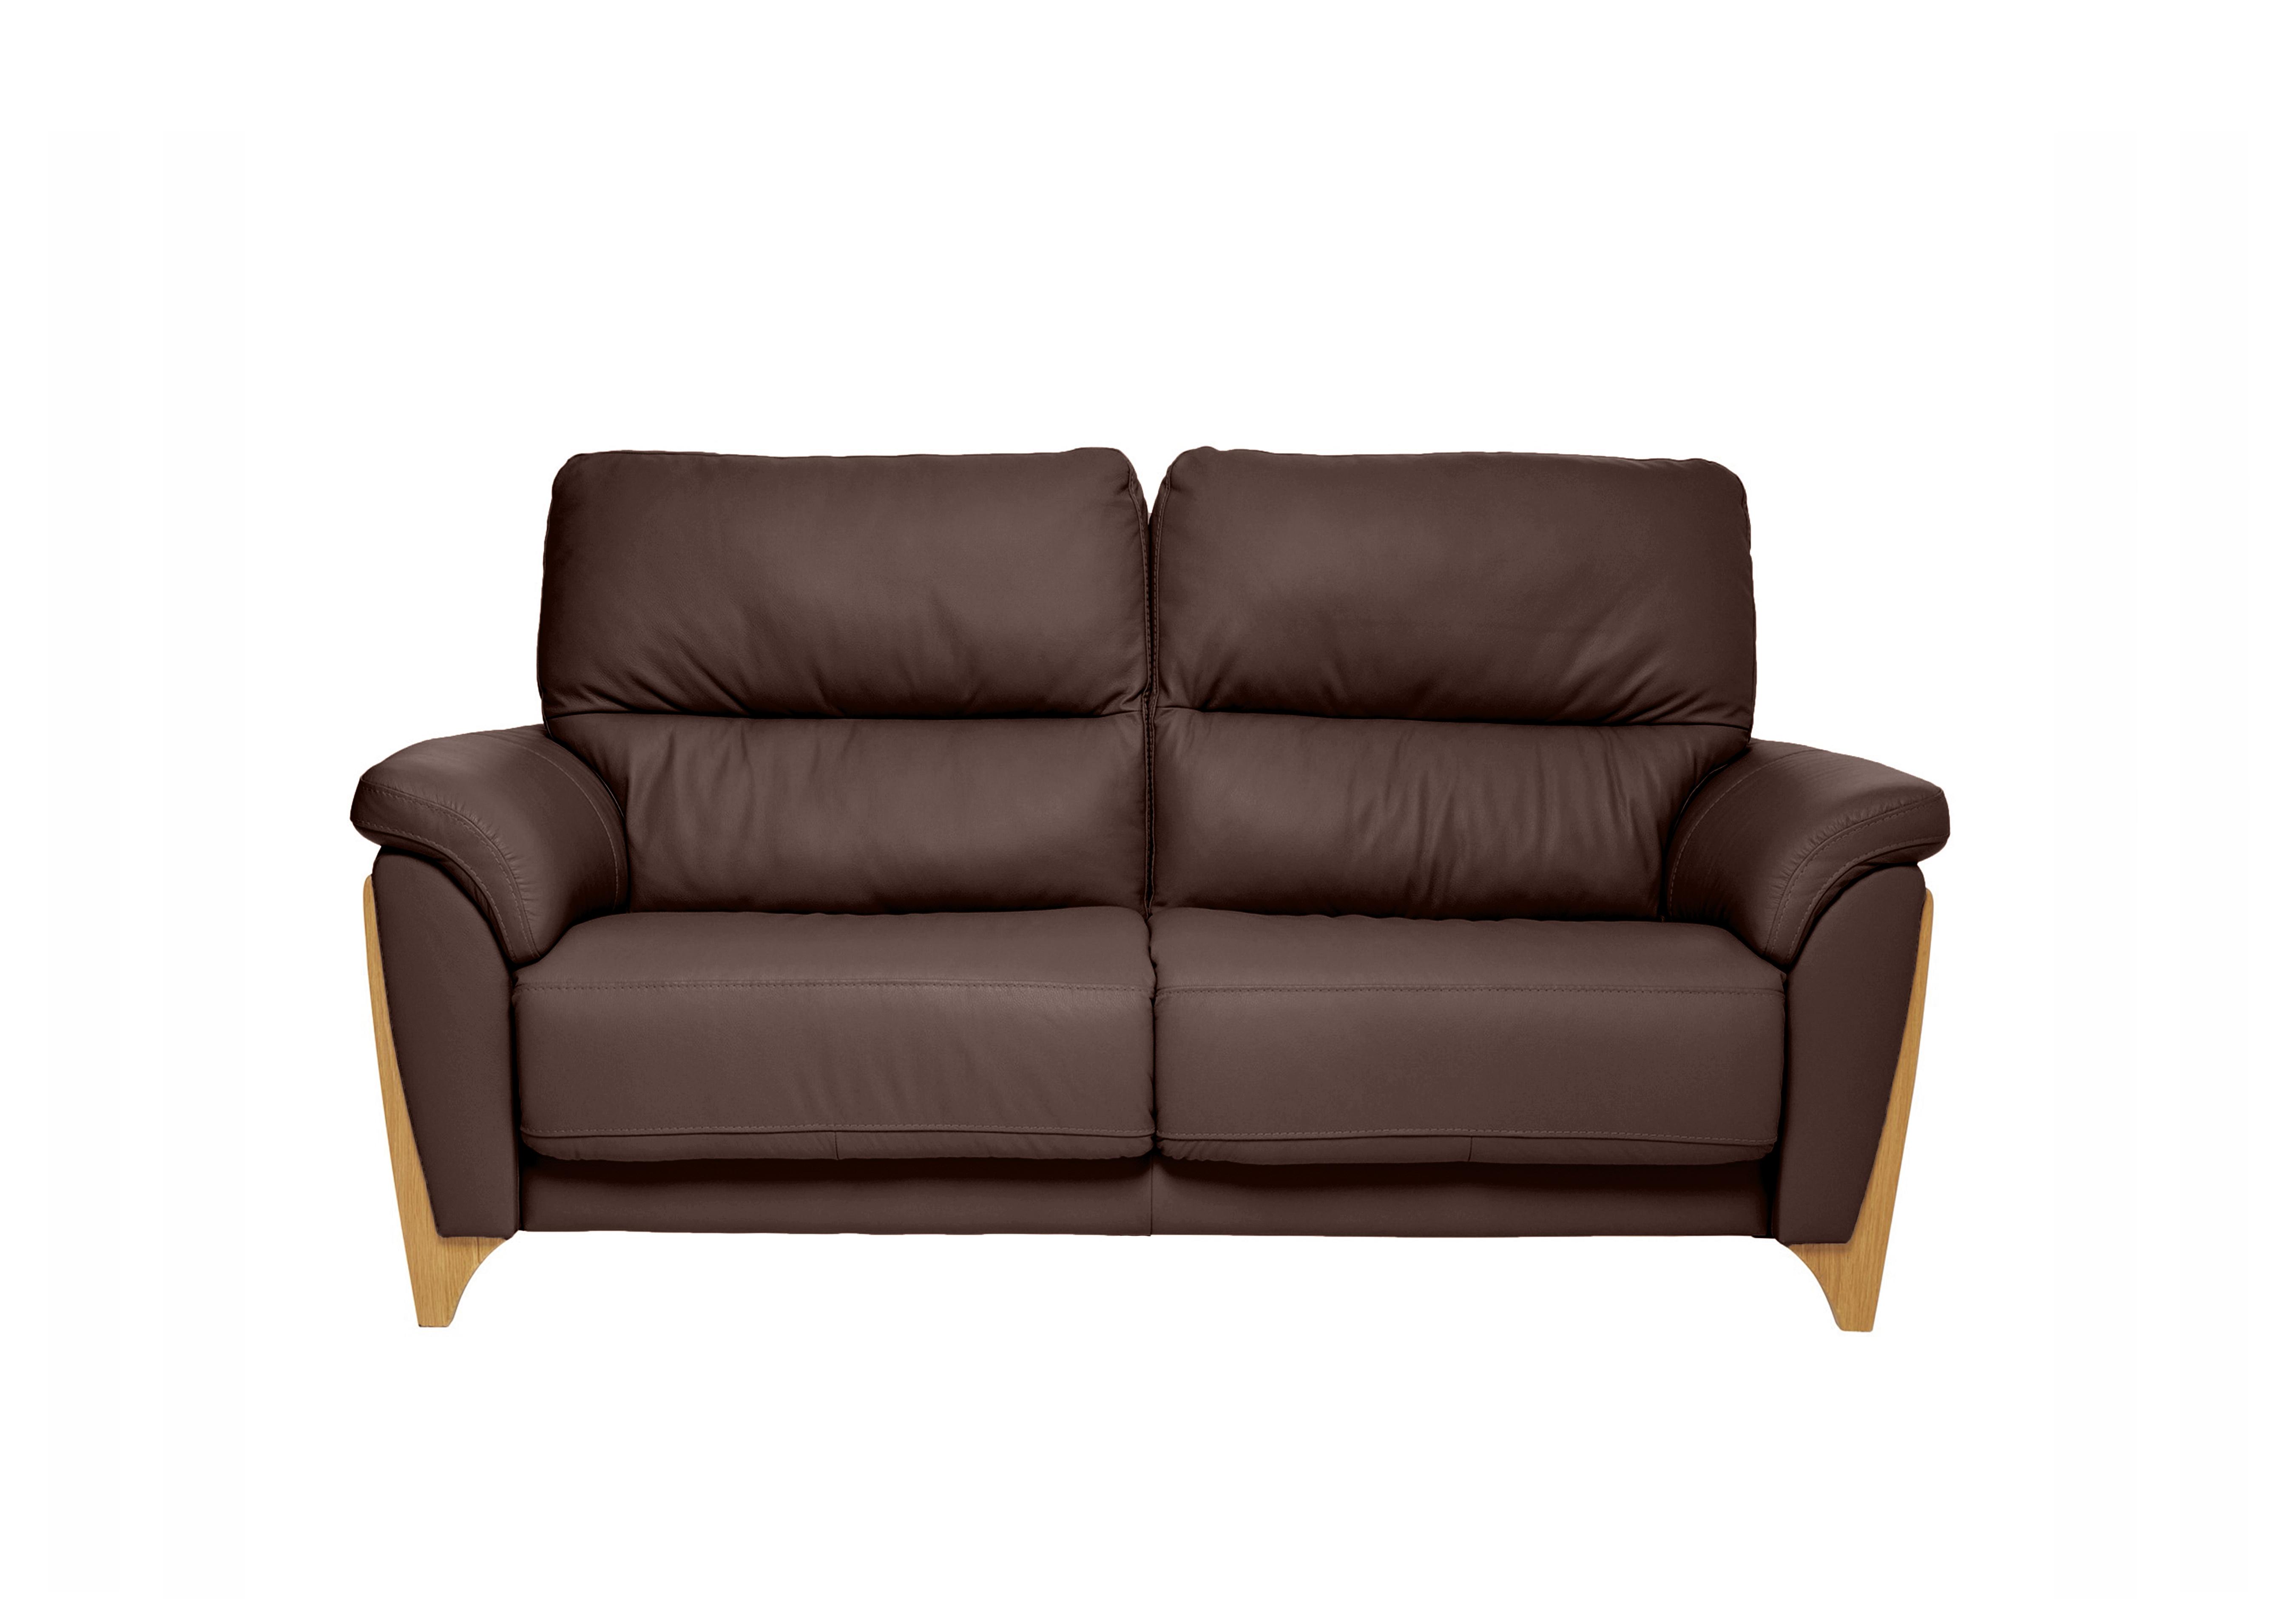 Enna Medium Leather Sofa in L901 on Furniture Village